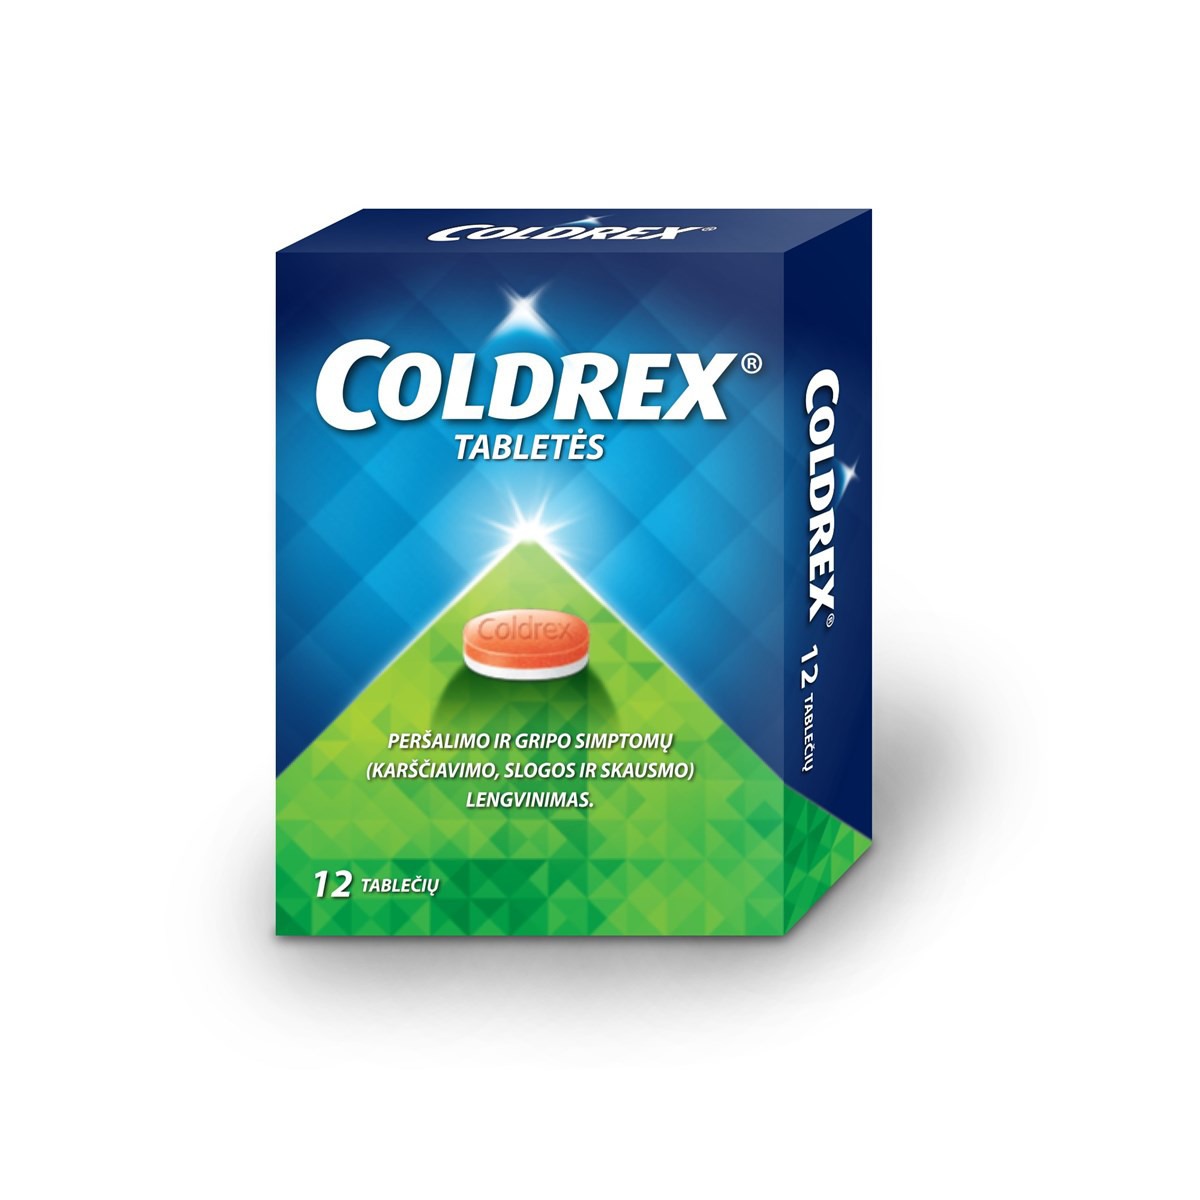 COLDREX, tabletės, N12